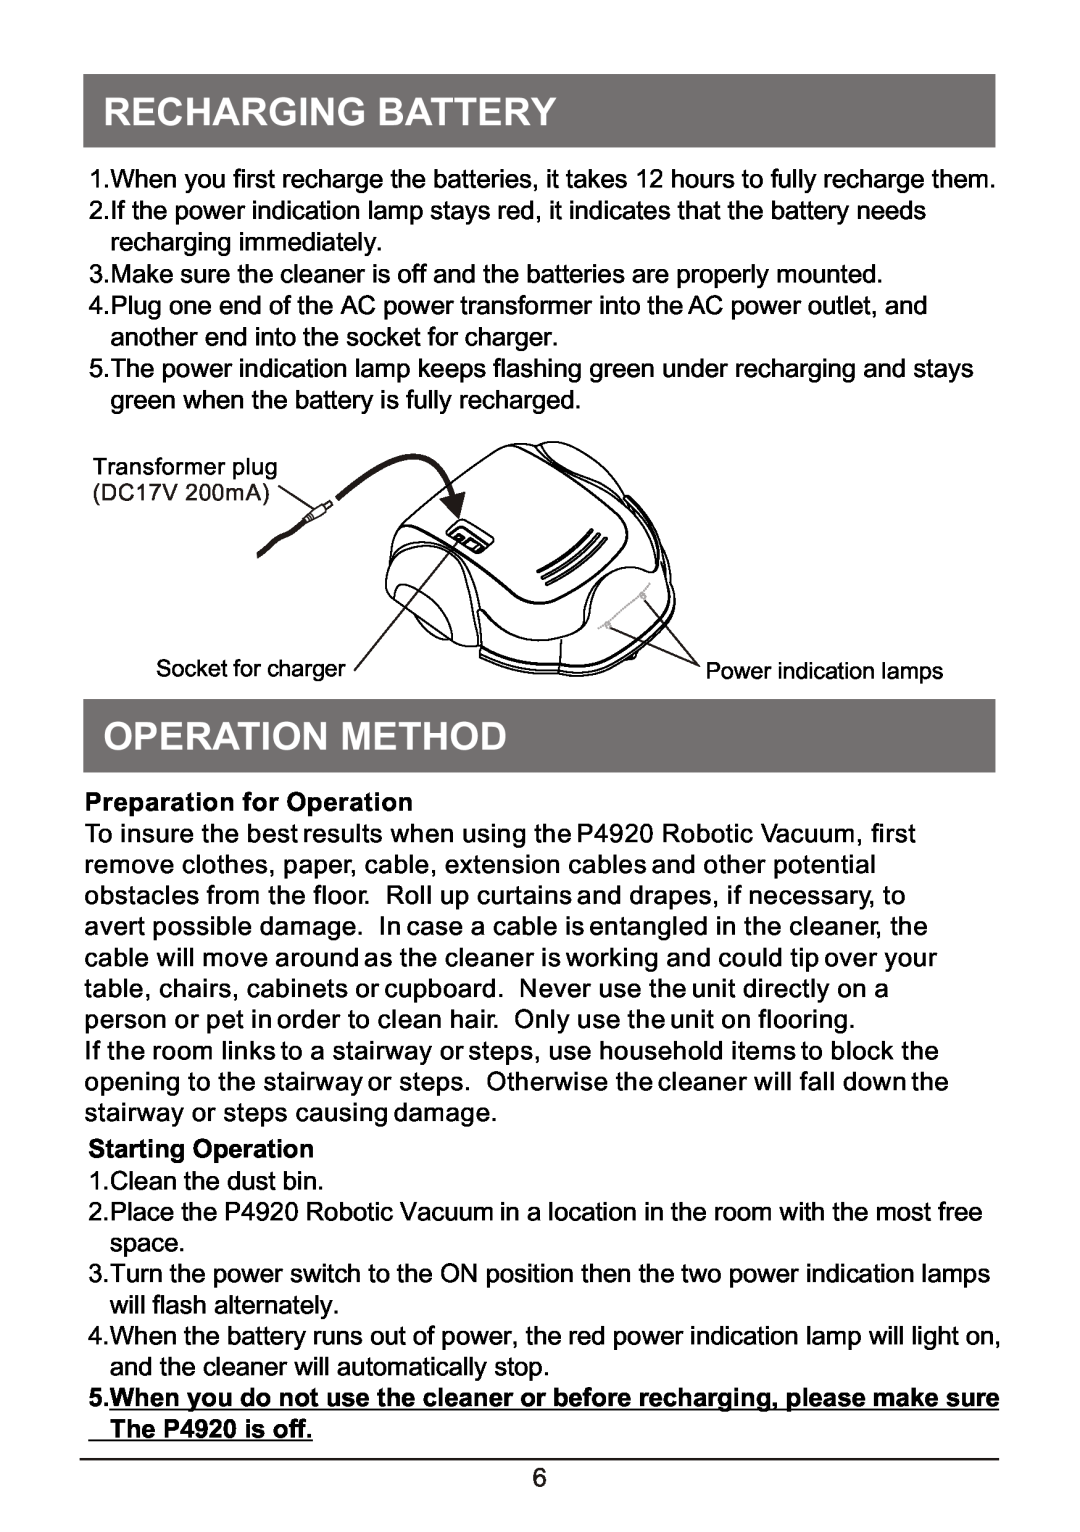 P3 International P4920 operation manual Recharging Battery, Operation Method, Preparation for Operation, Starting Operation 